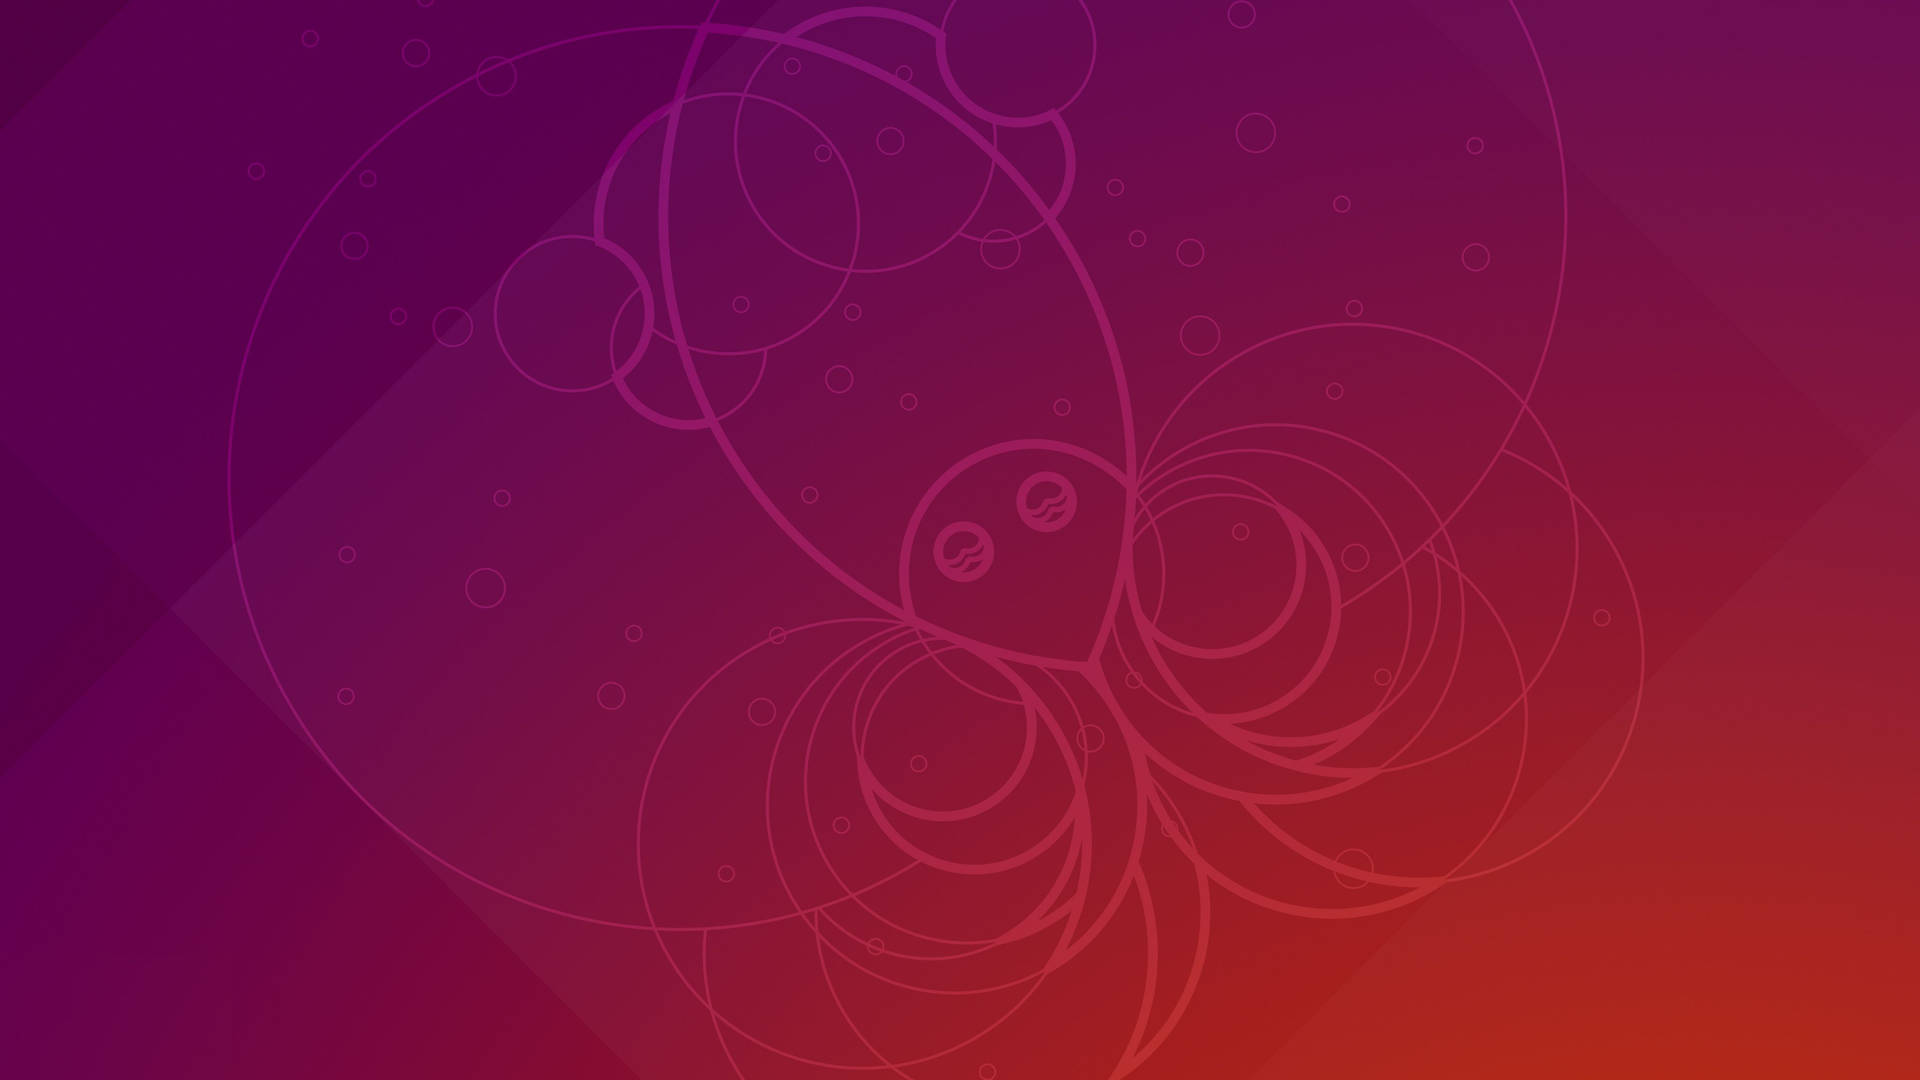 Ubuntu 4096X2304 Wallpaper and Background Image